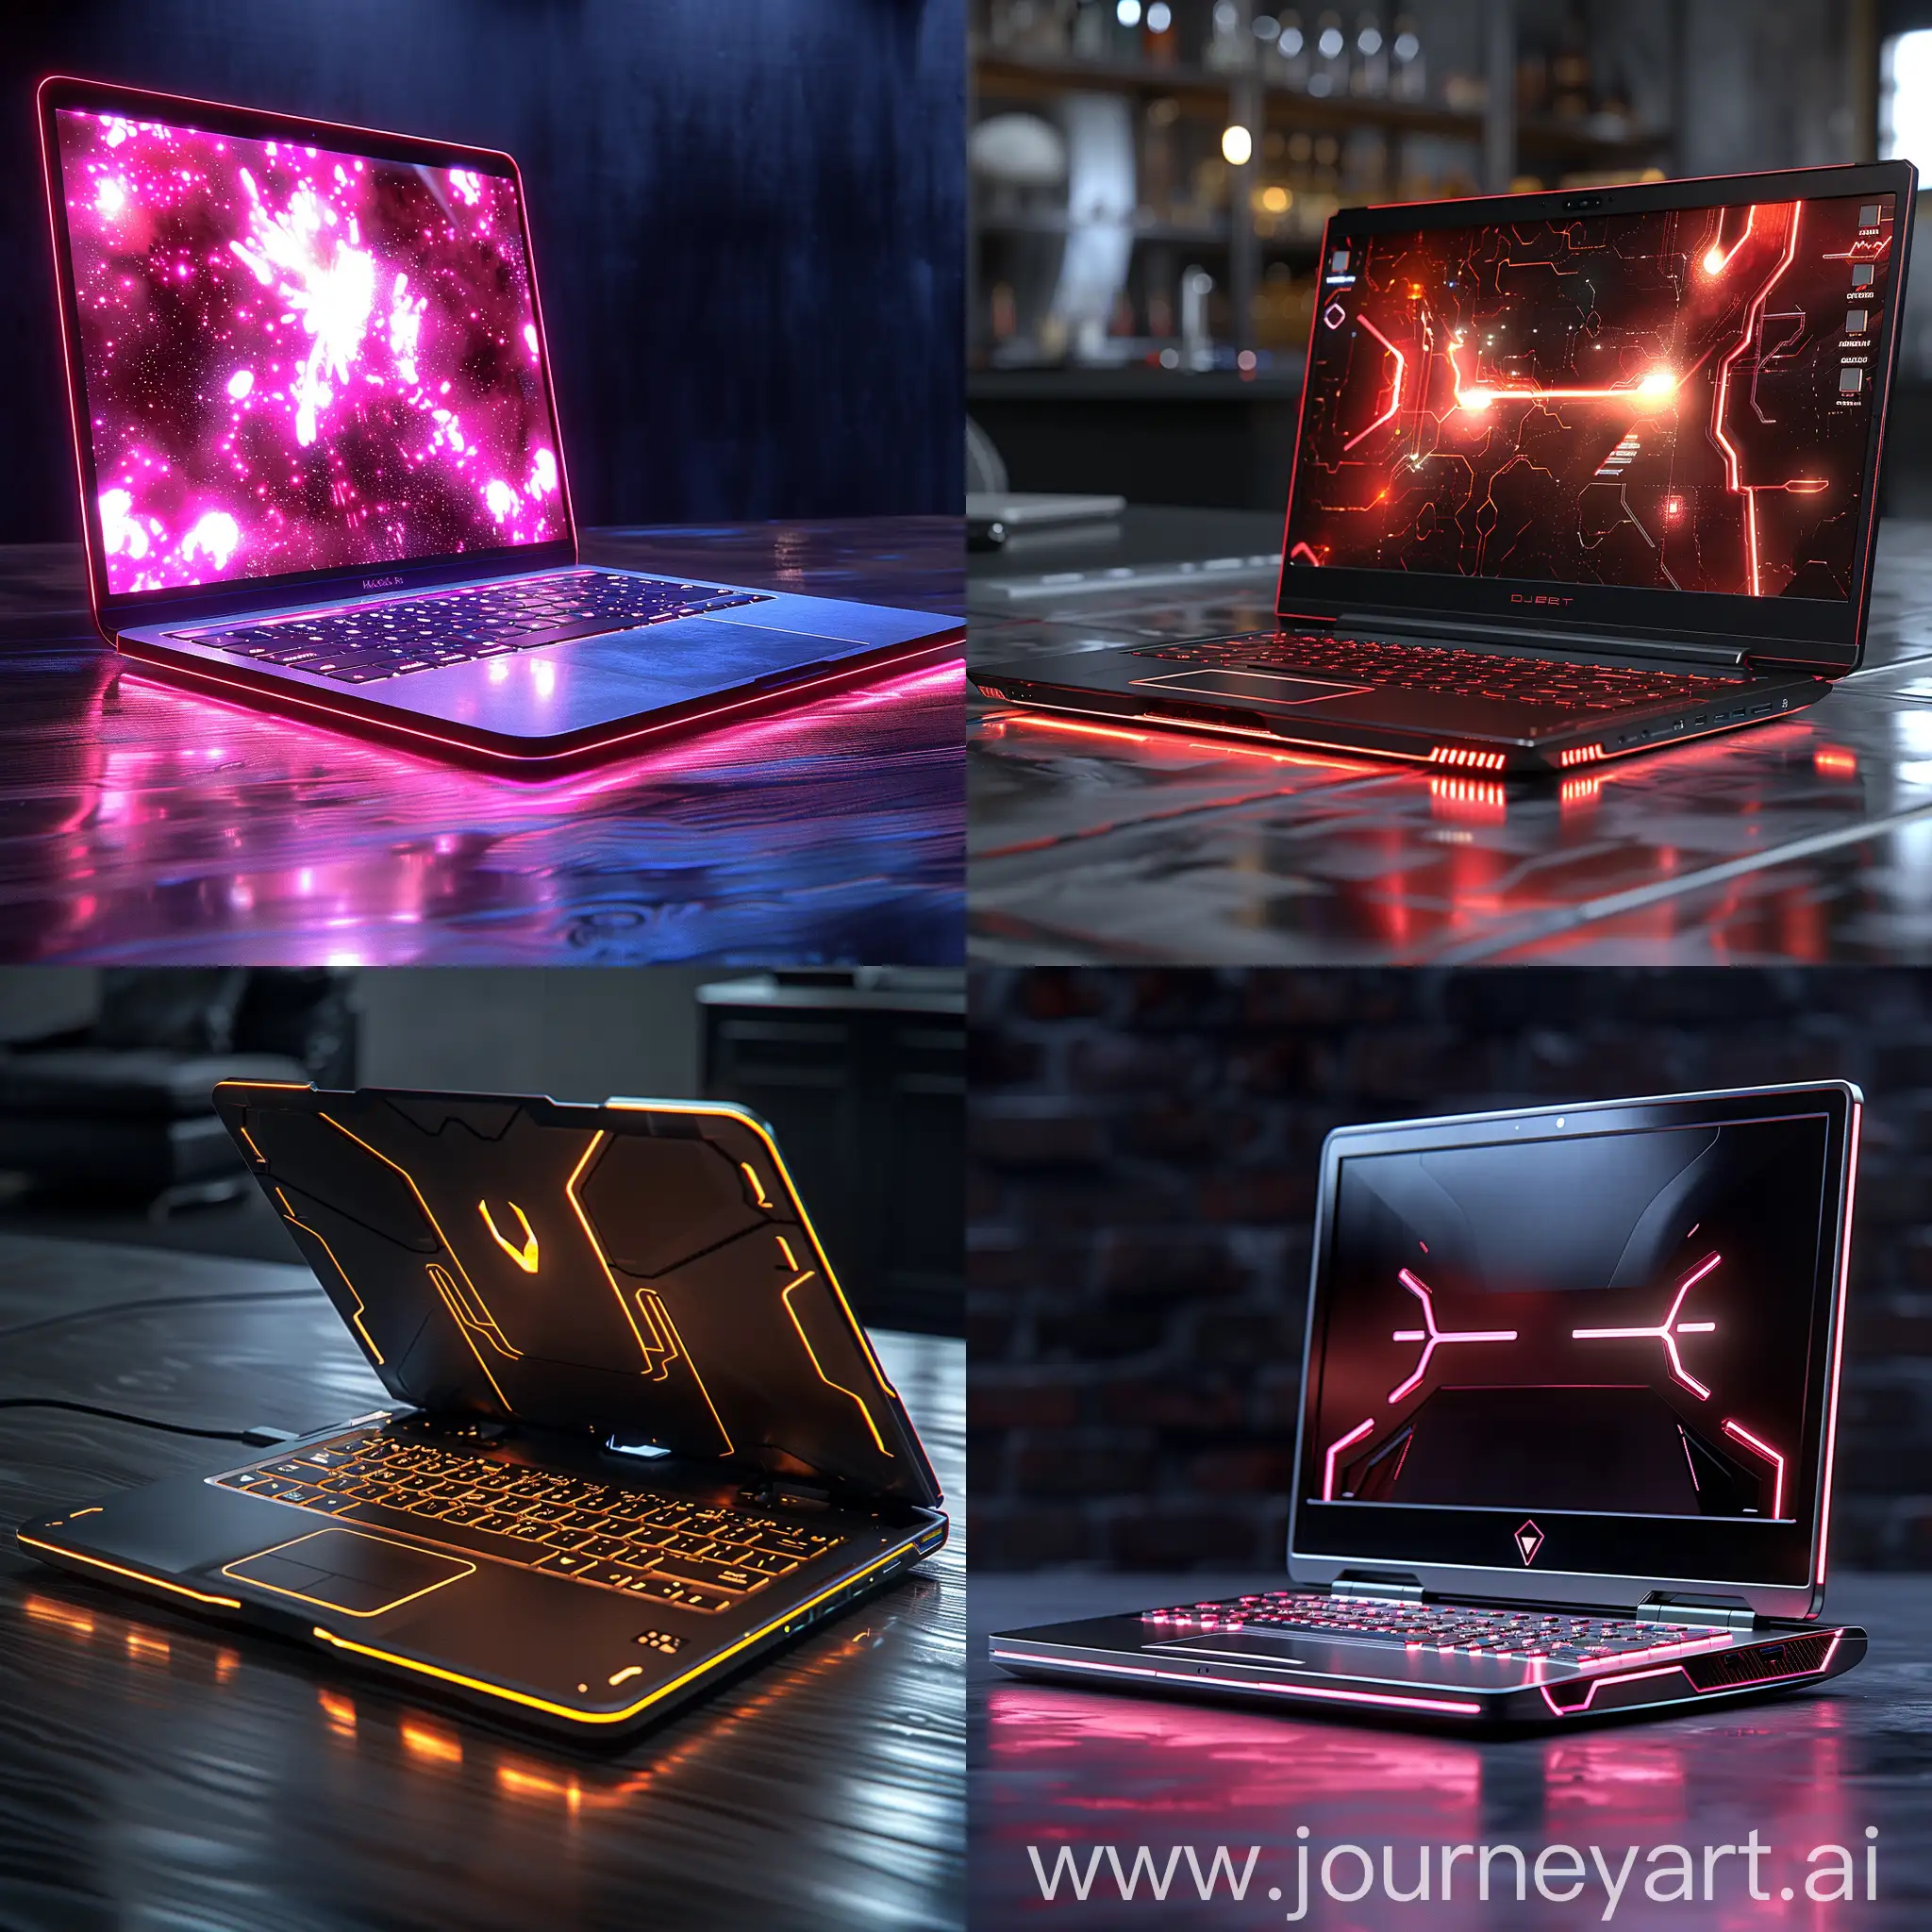 Futuristic-Ultramodern-Laptop-Design-A-Glimpse-into-NextGeneration-Technology